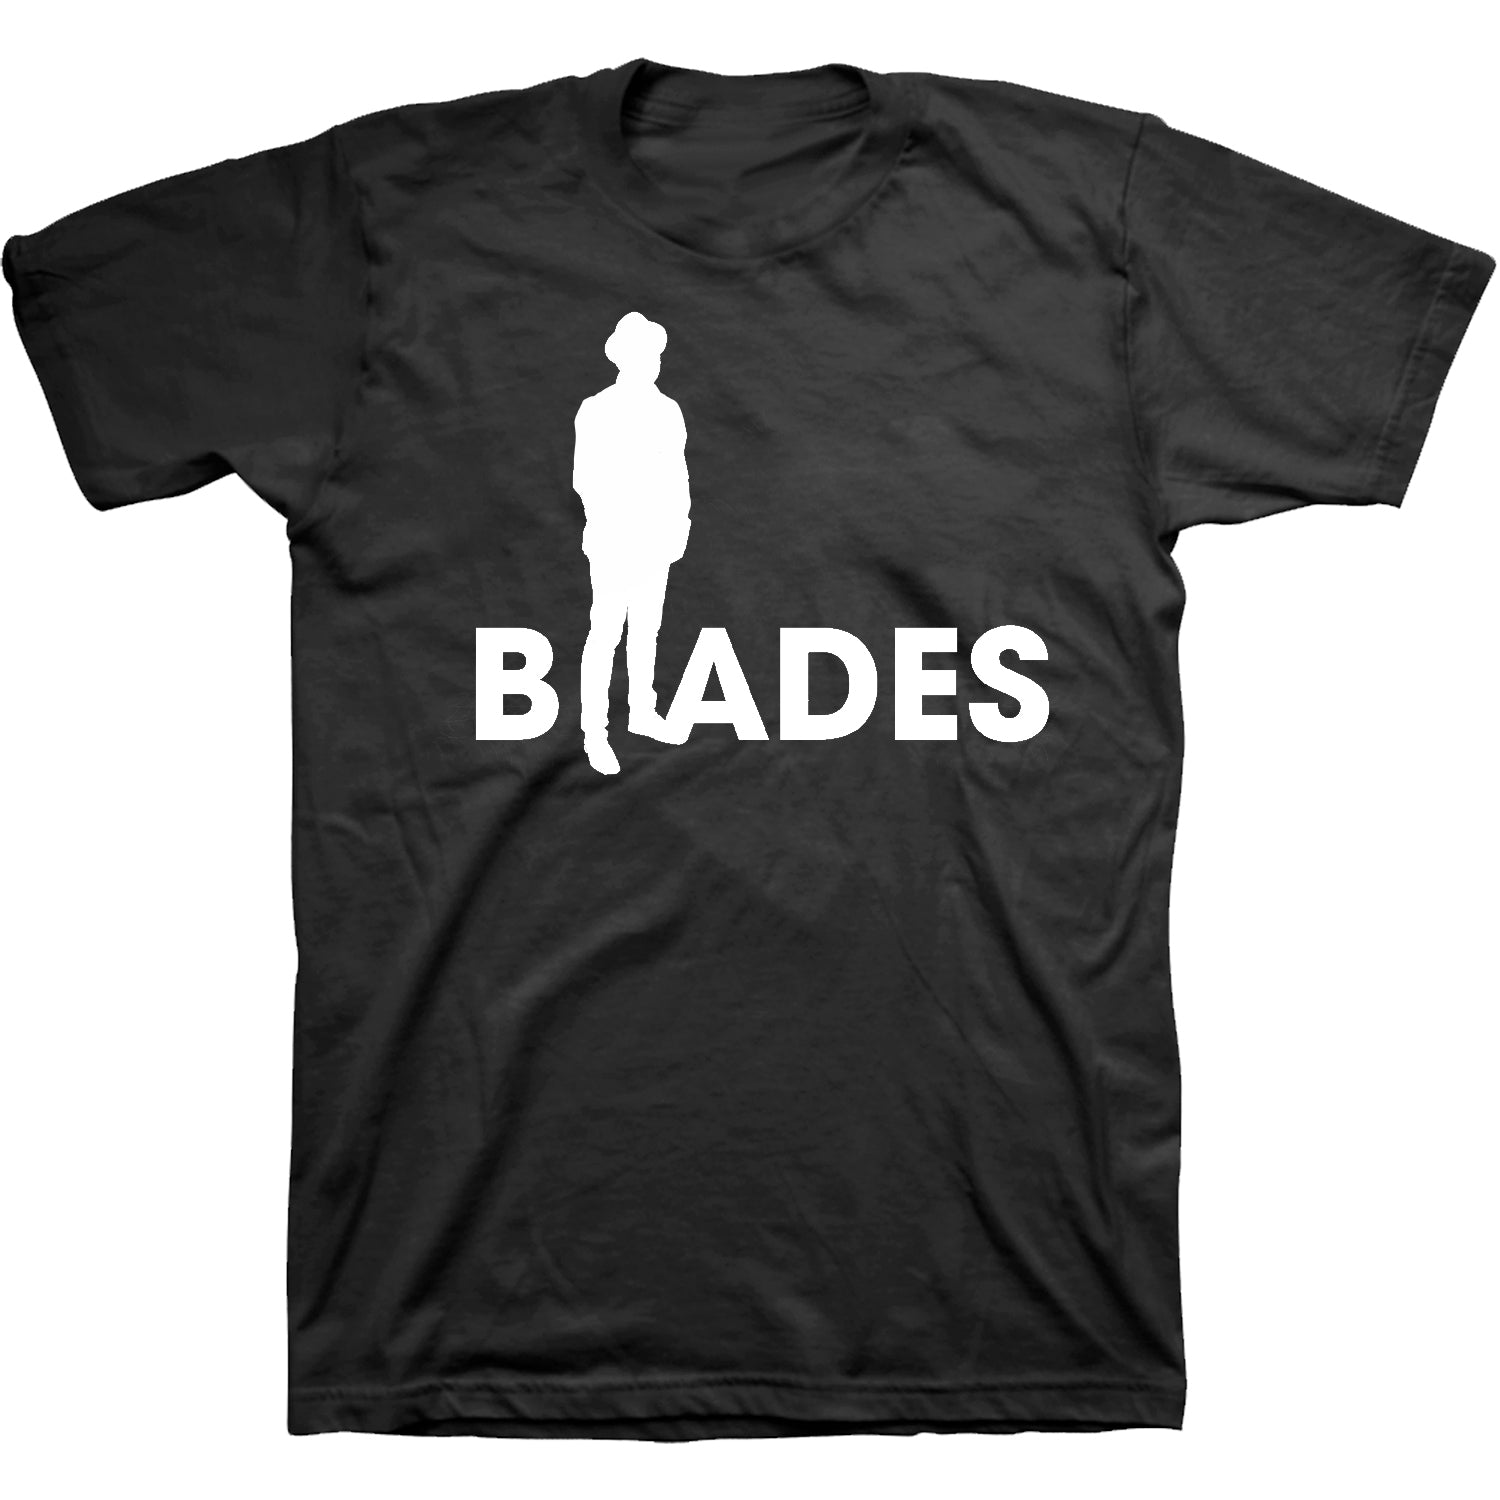 Blades T-Shirt - Black